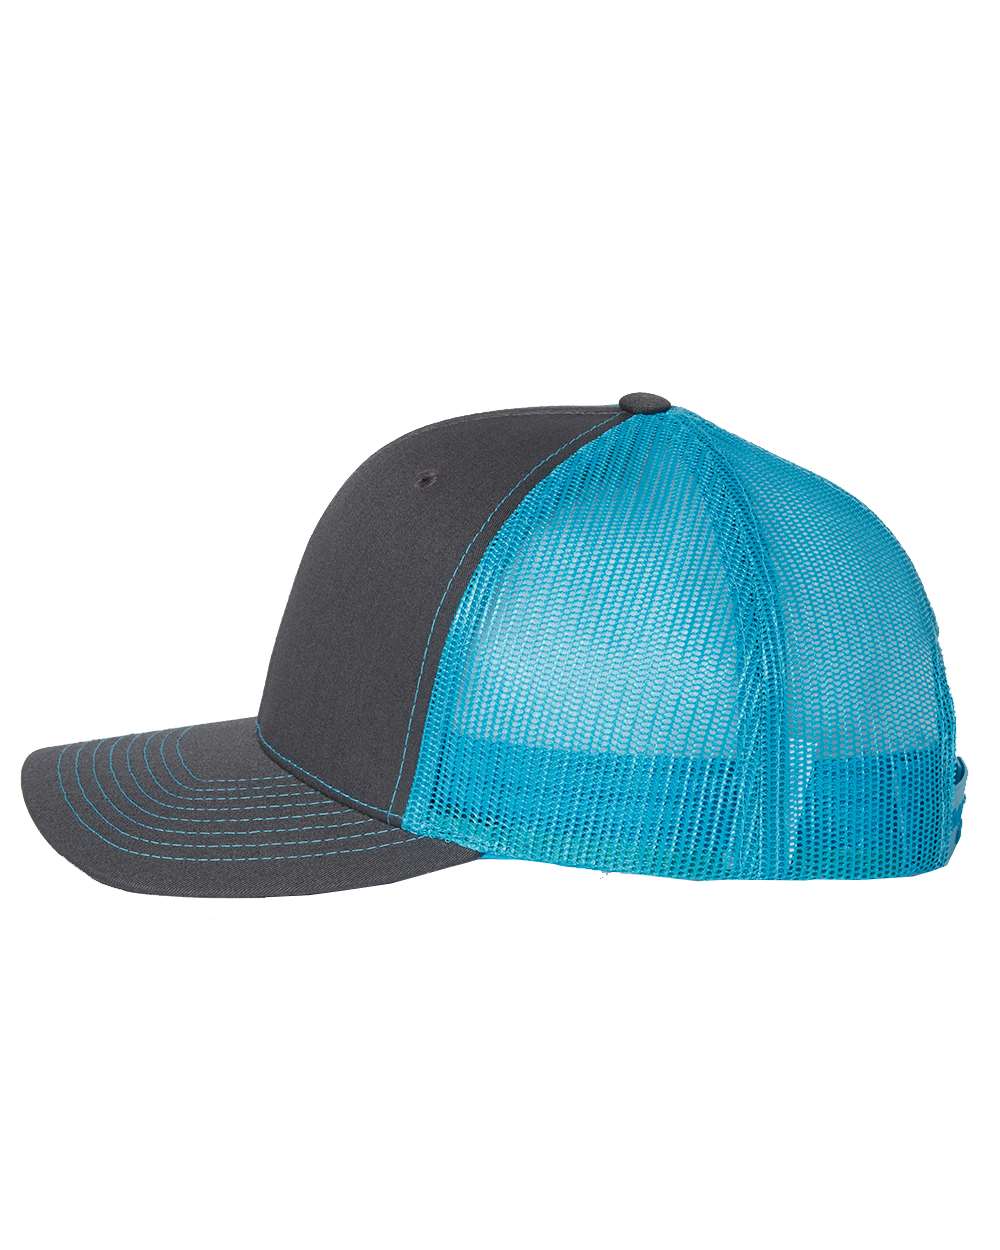 Customizable Patch on Richardson Hat